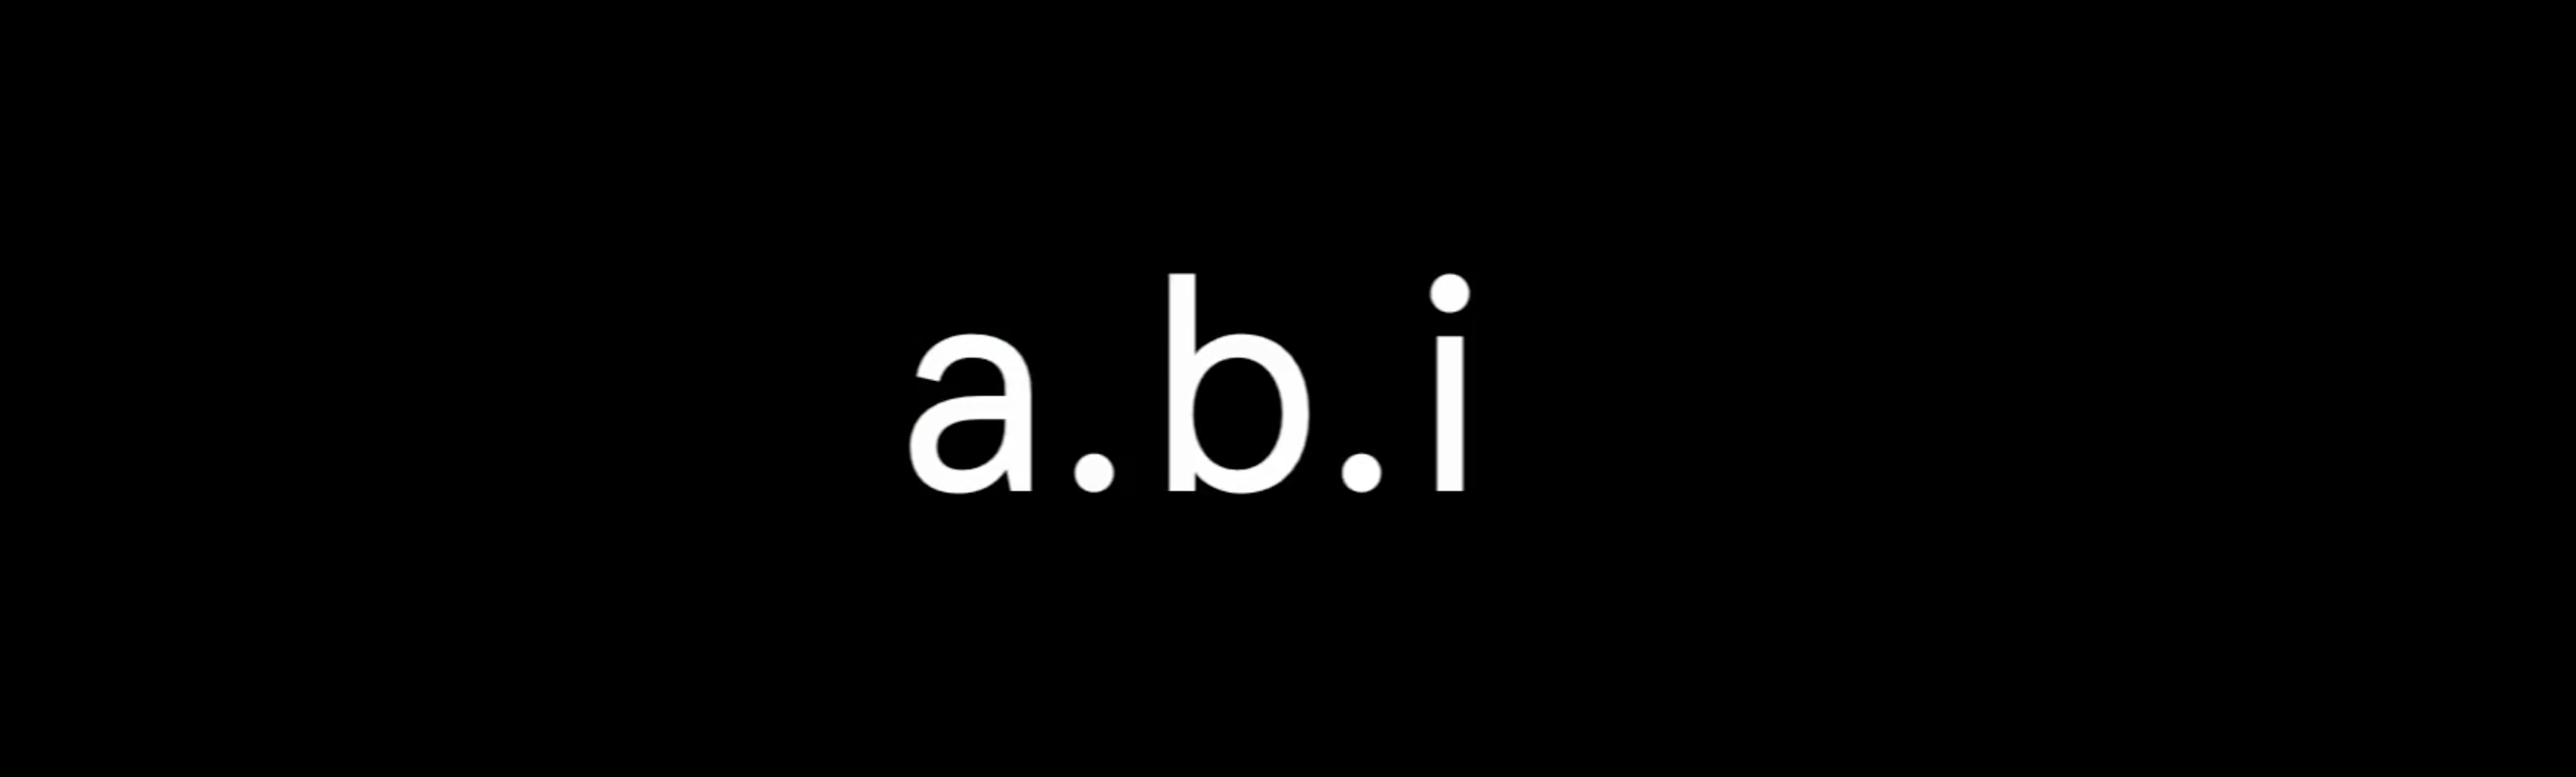 a.b.i.